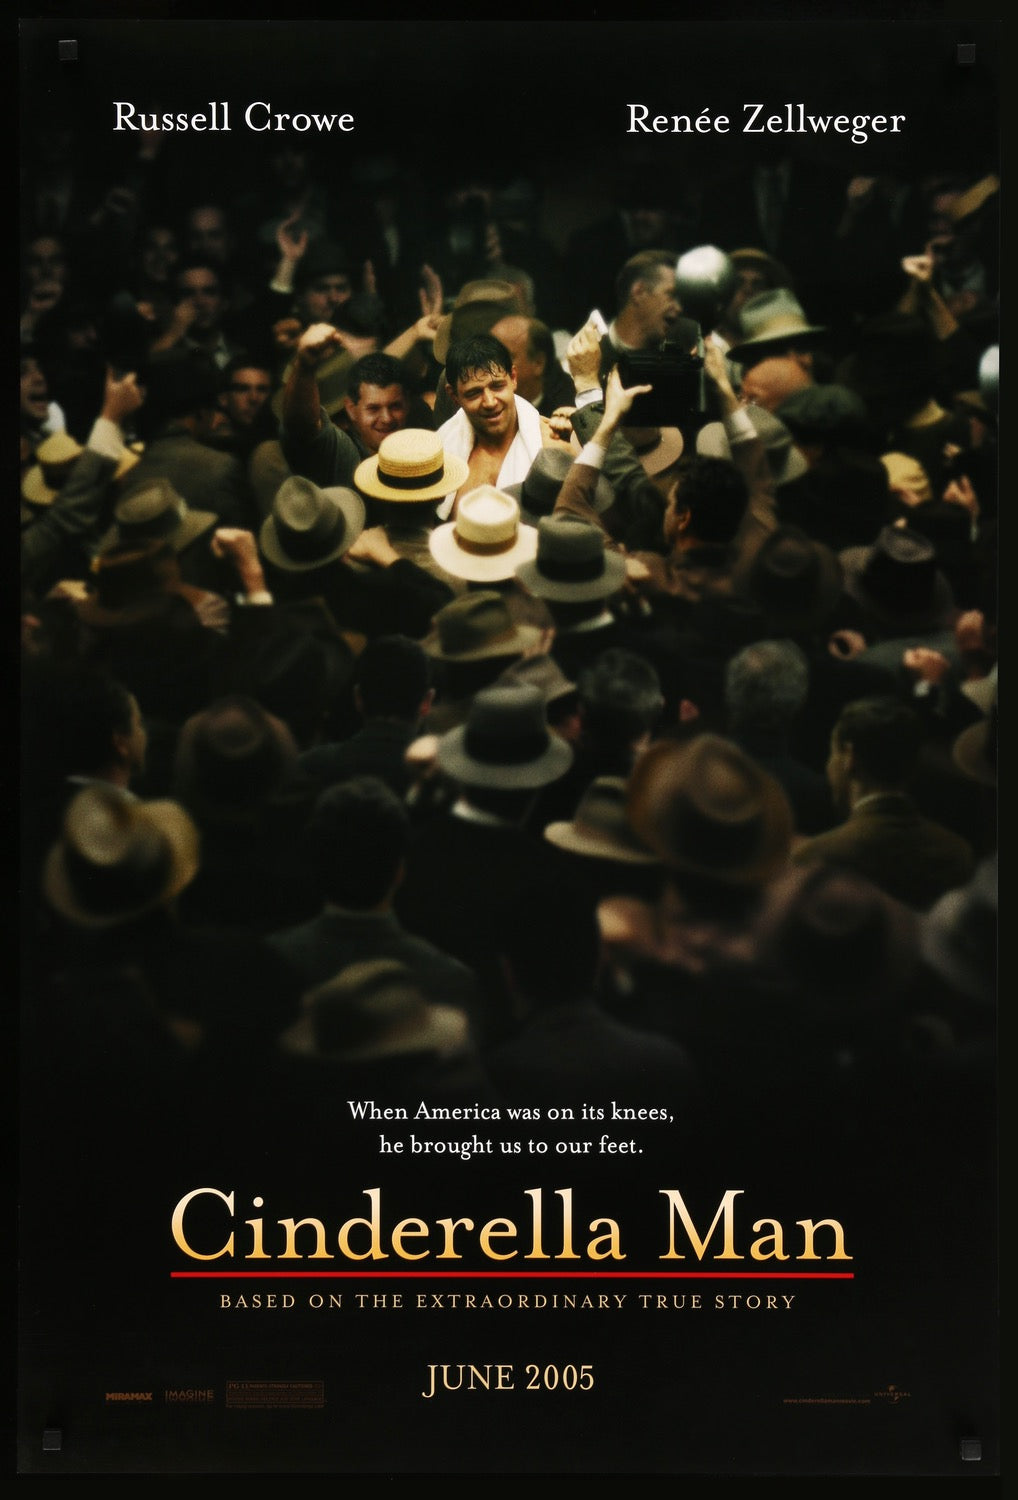 Cinderella Man (2005) original movie poster for sale at Original Film Art